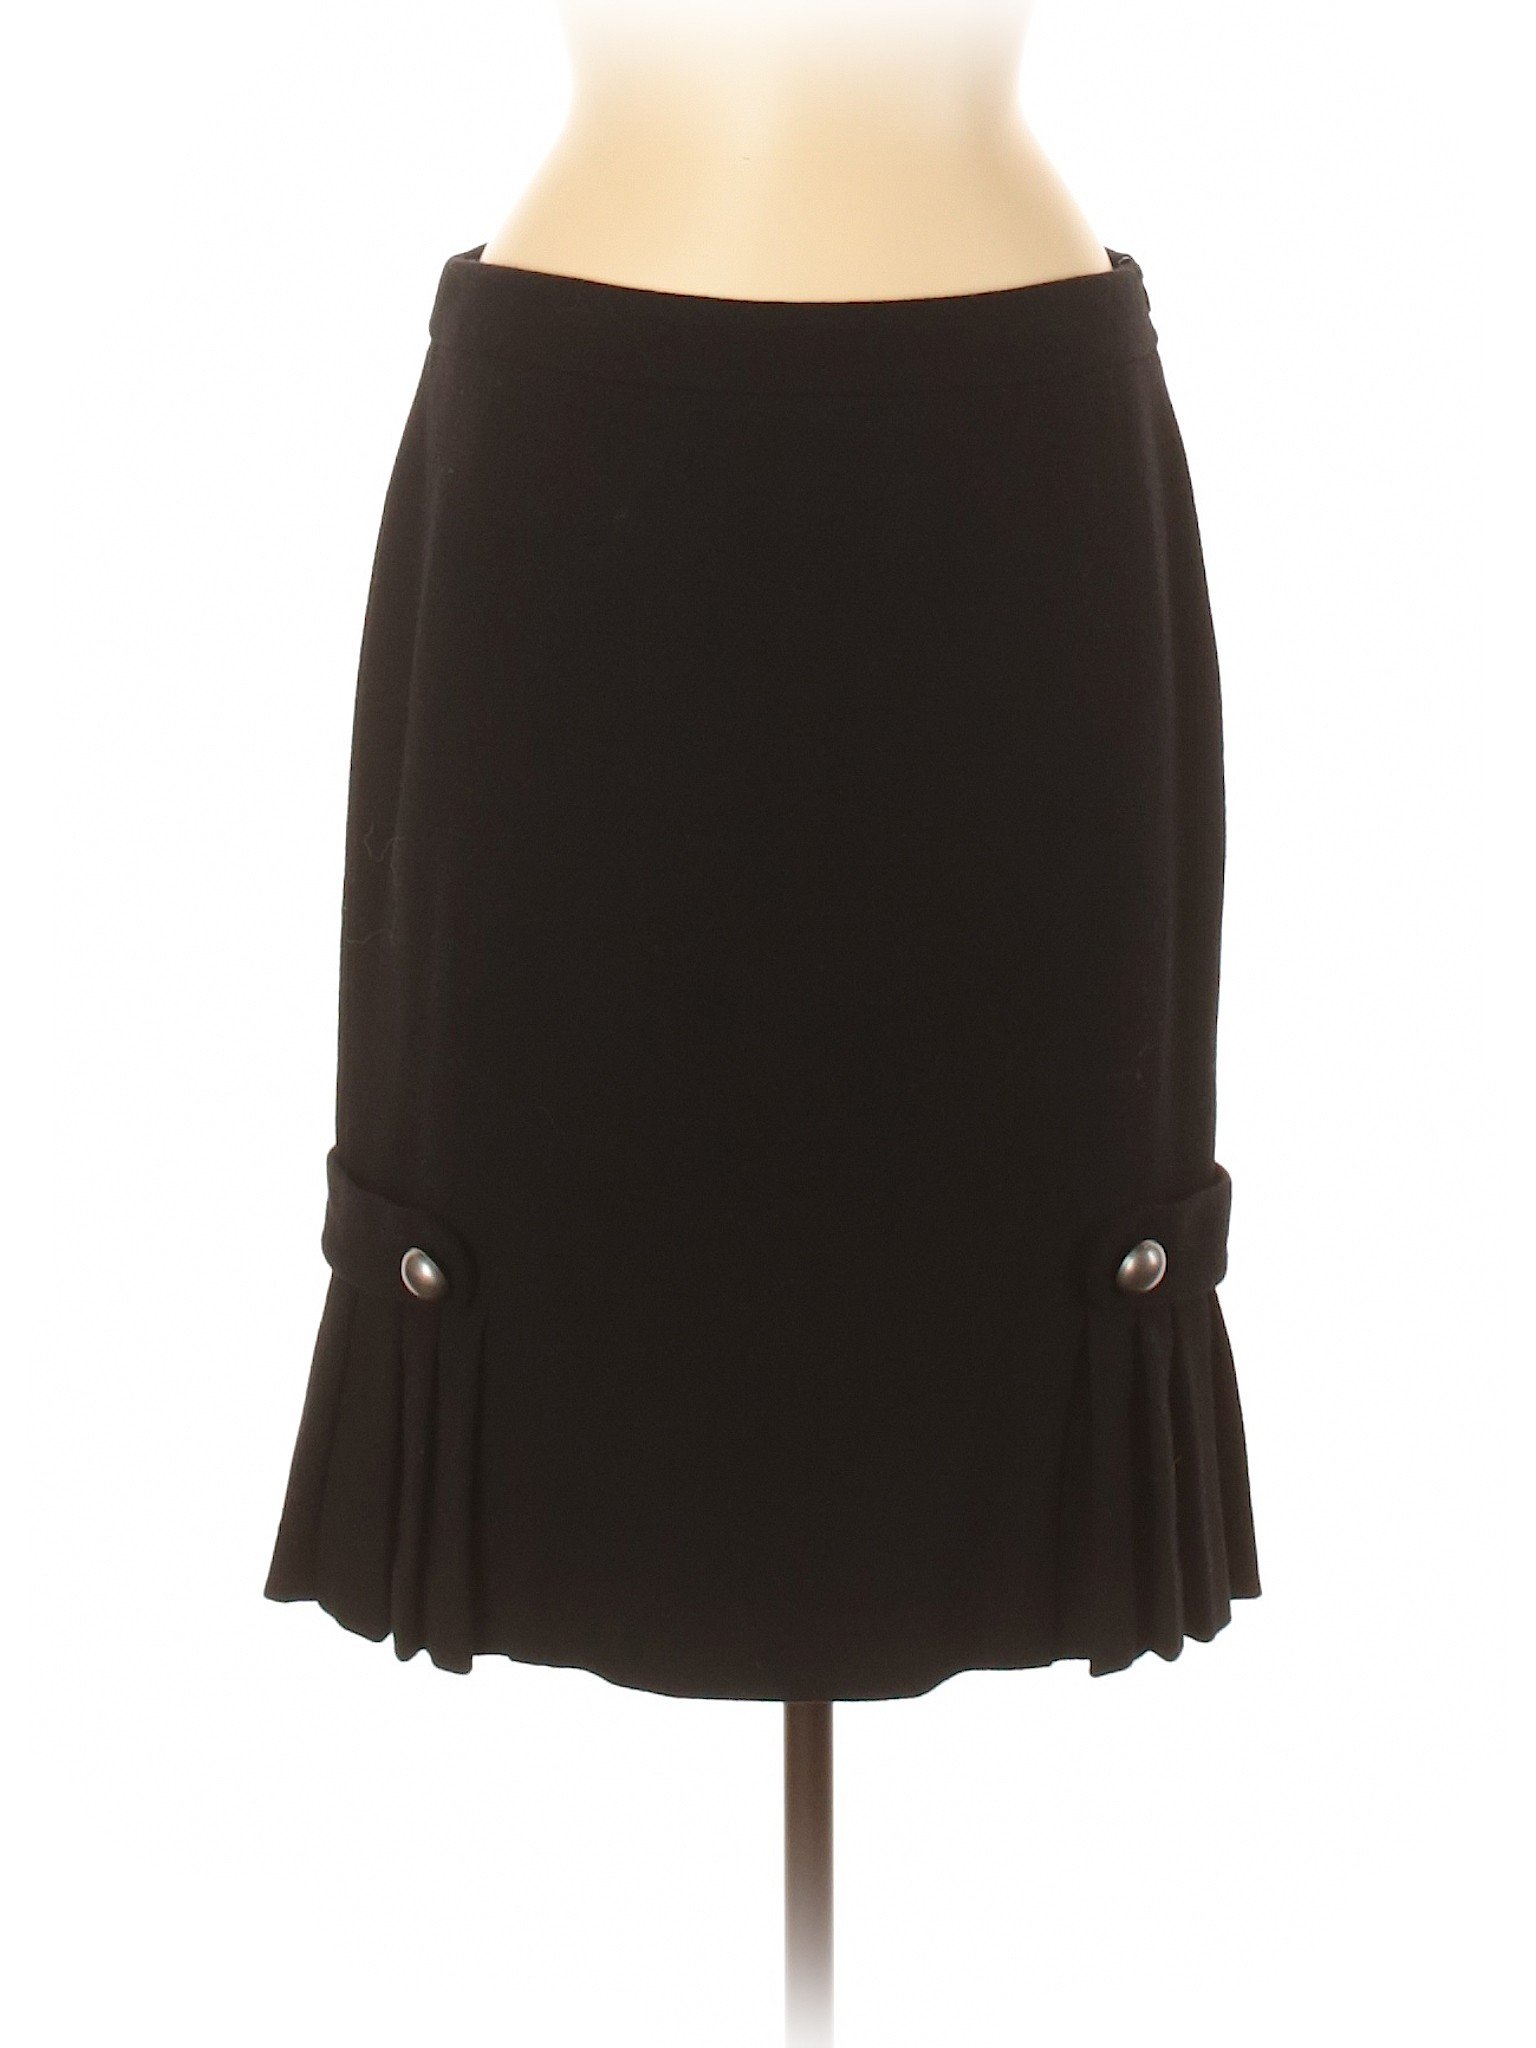 Banana Republic Women Black Wool Skirt 6 | eBay